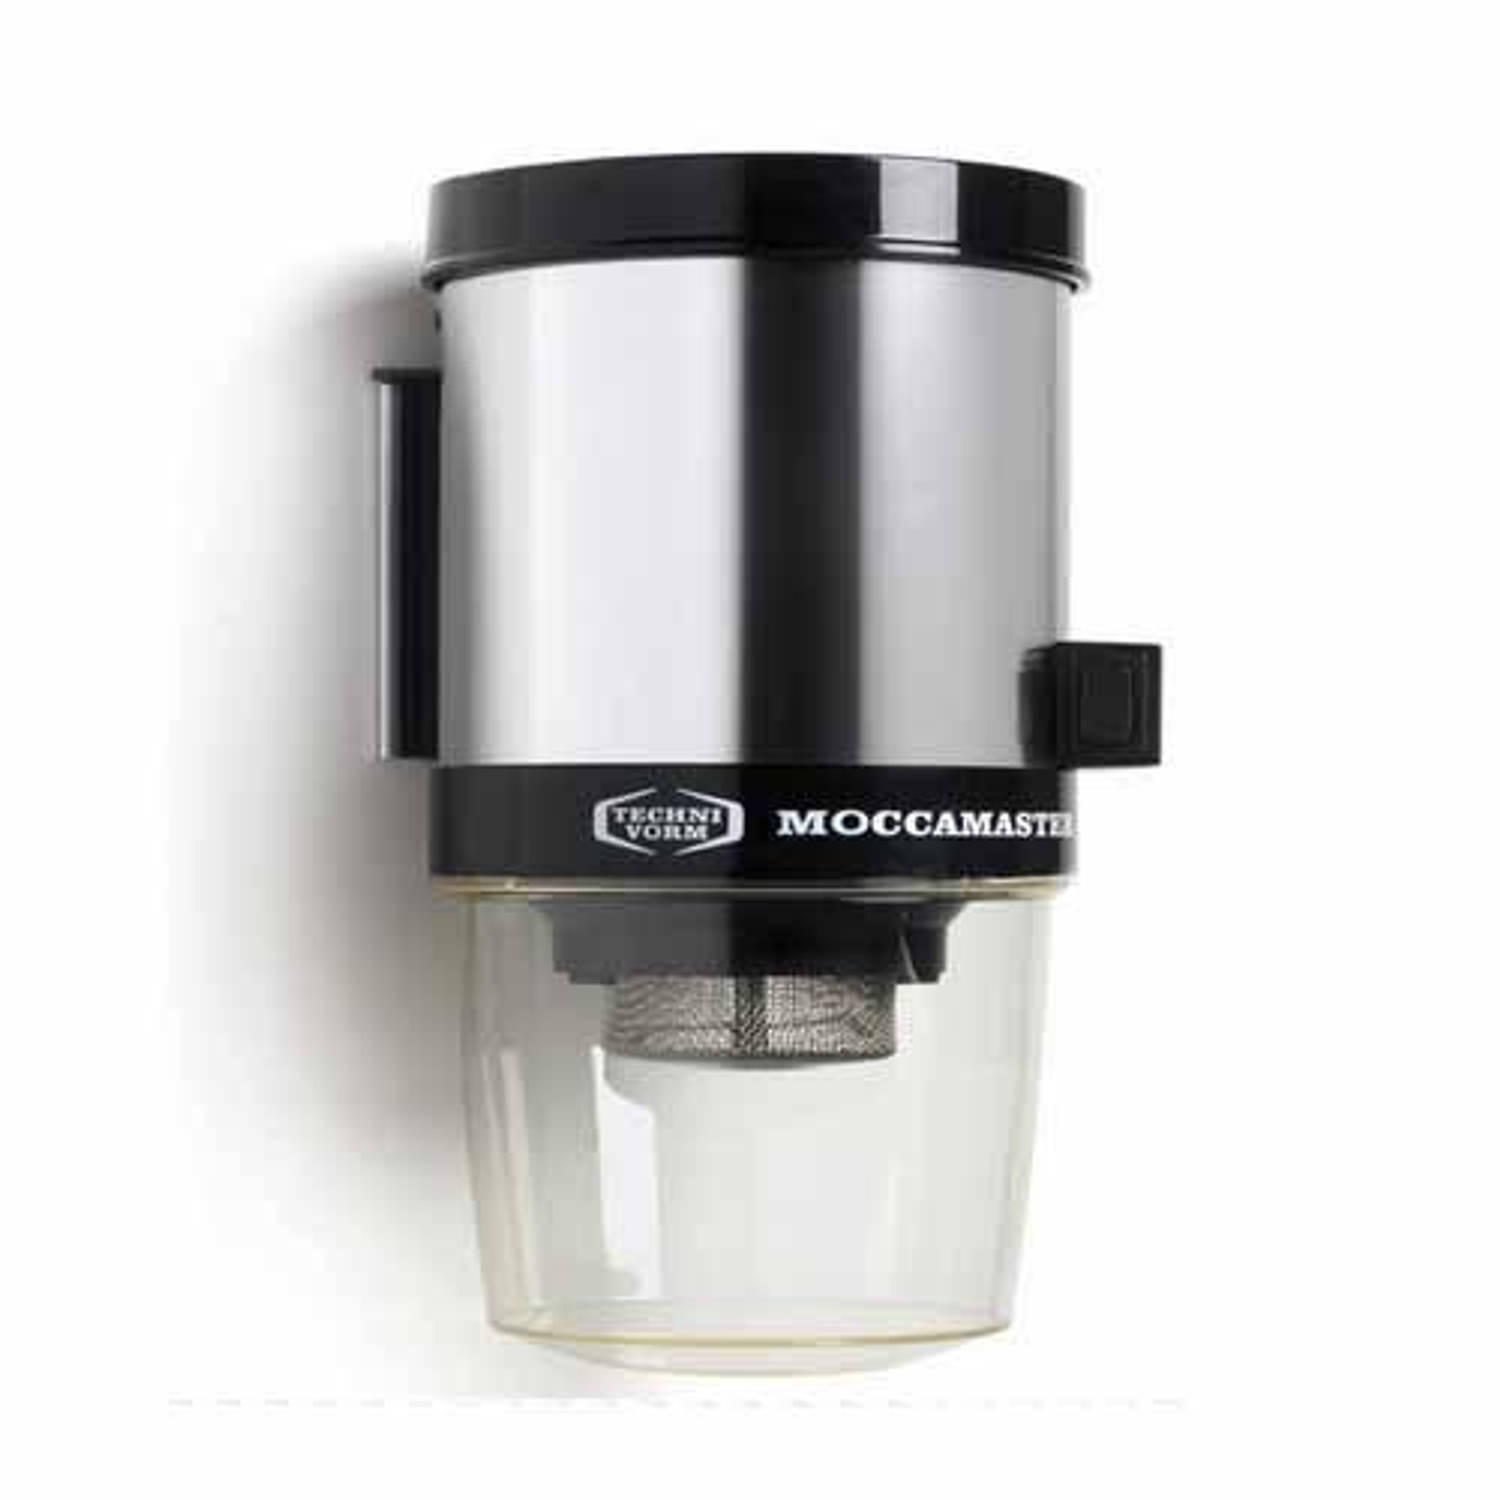 afstand klif genezen Bonenmaler / koffiemolen wandmodel km4 - moccamaster | Blokker